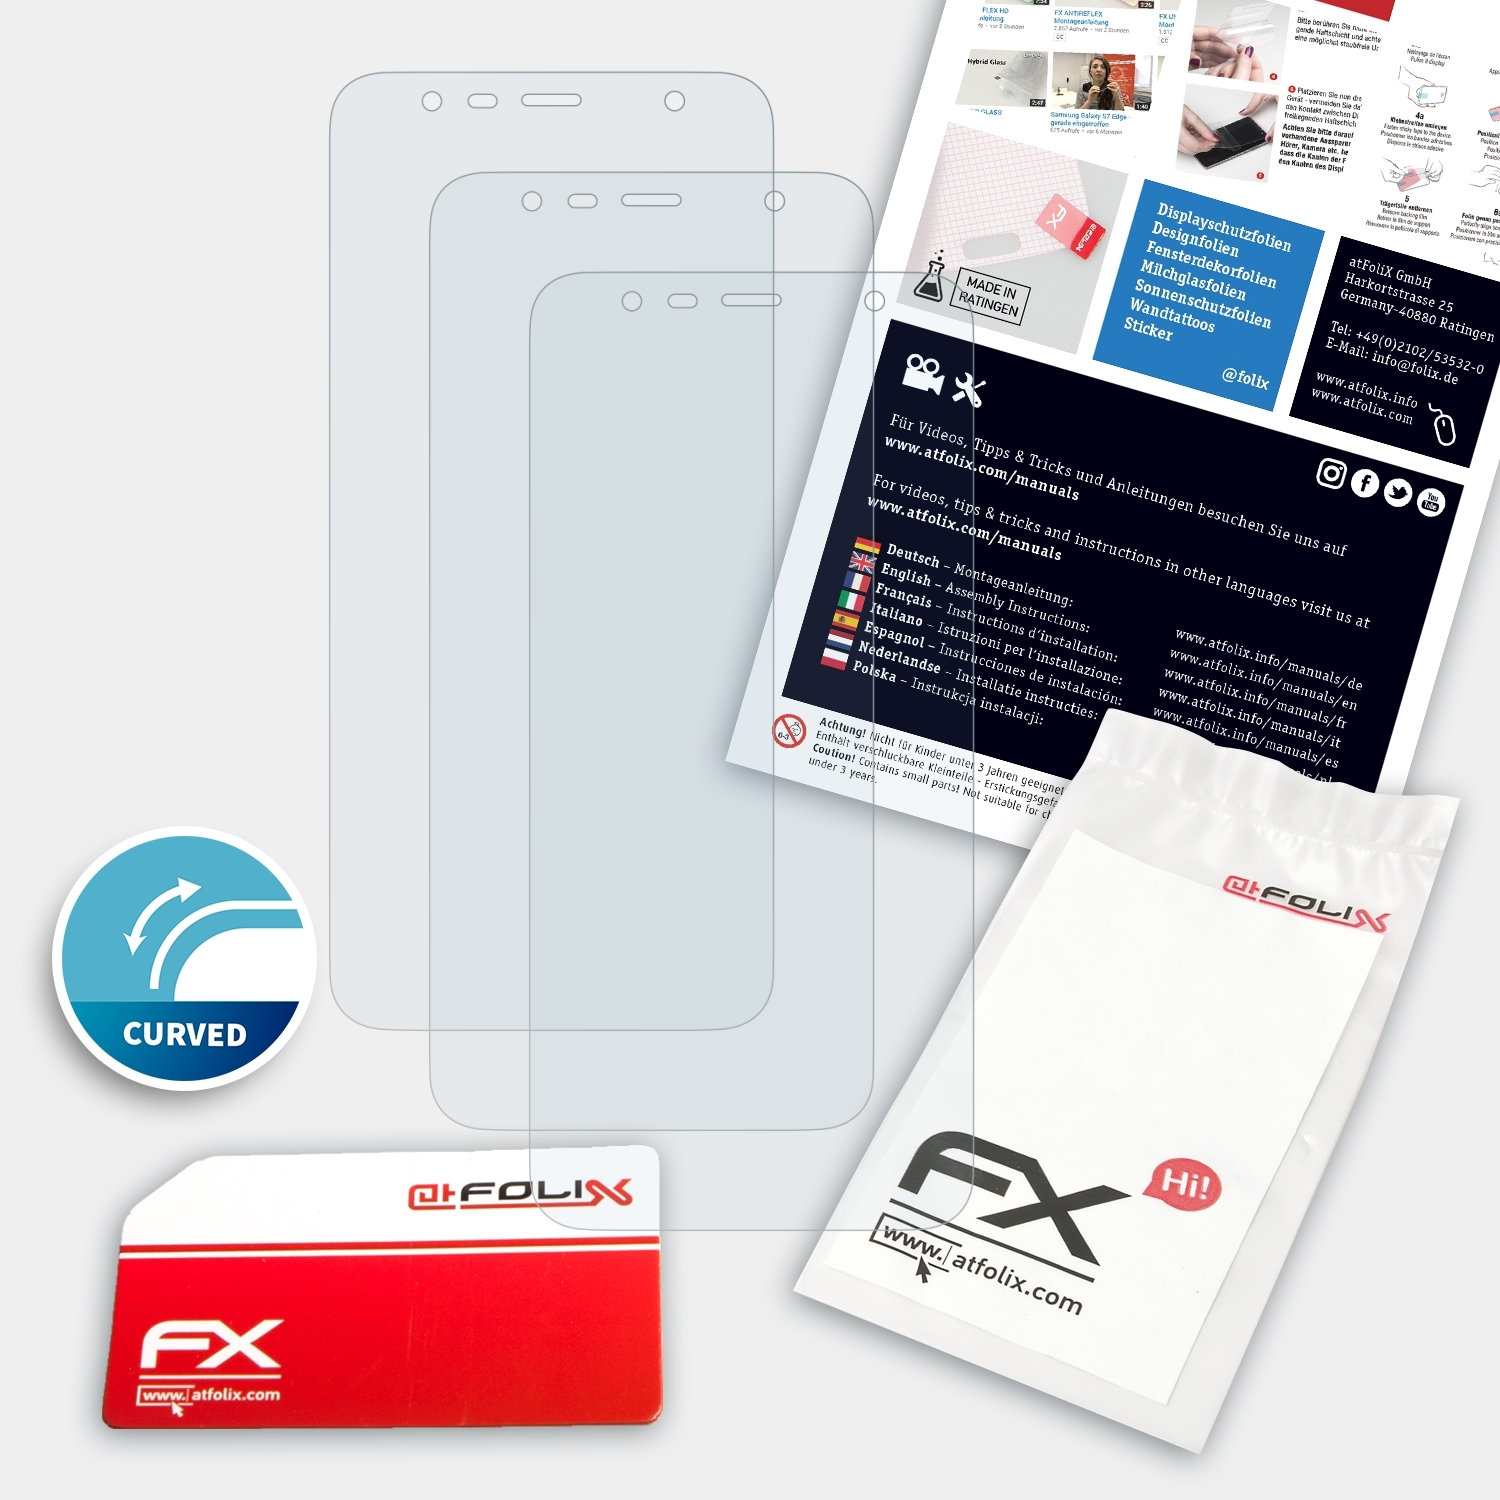 3x Samsung FX-ActiFleX ATFOLIX Galaxy J4+) Displayschutz(für